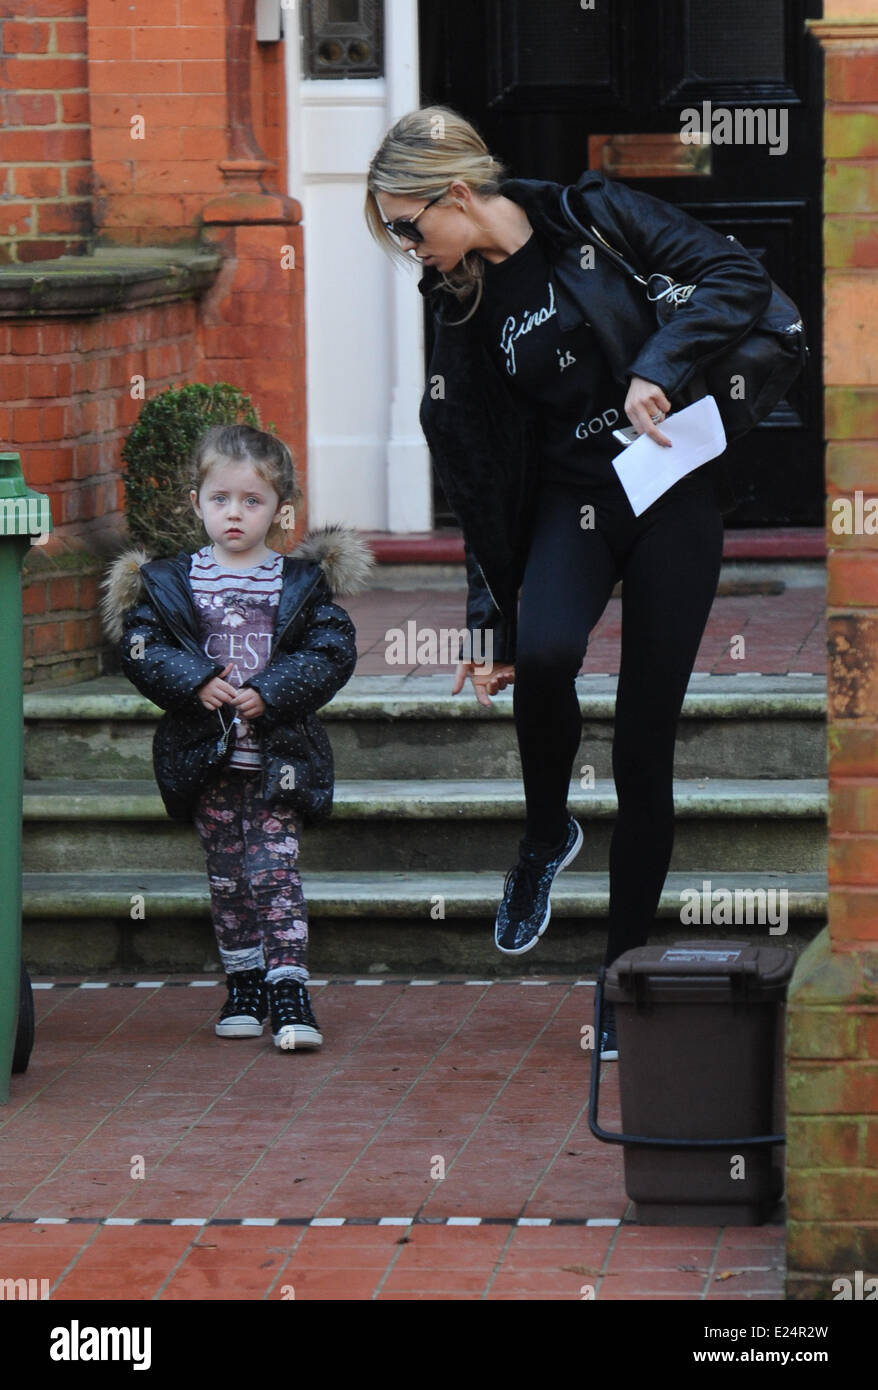 Abbey Clancy, Sophia Crouch leaving their london home. London, England - 10.01.2014  Where: London, United Kingdom When: 10 Jan 2014 Stock Photo